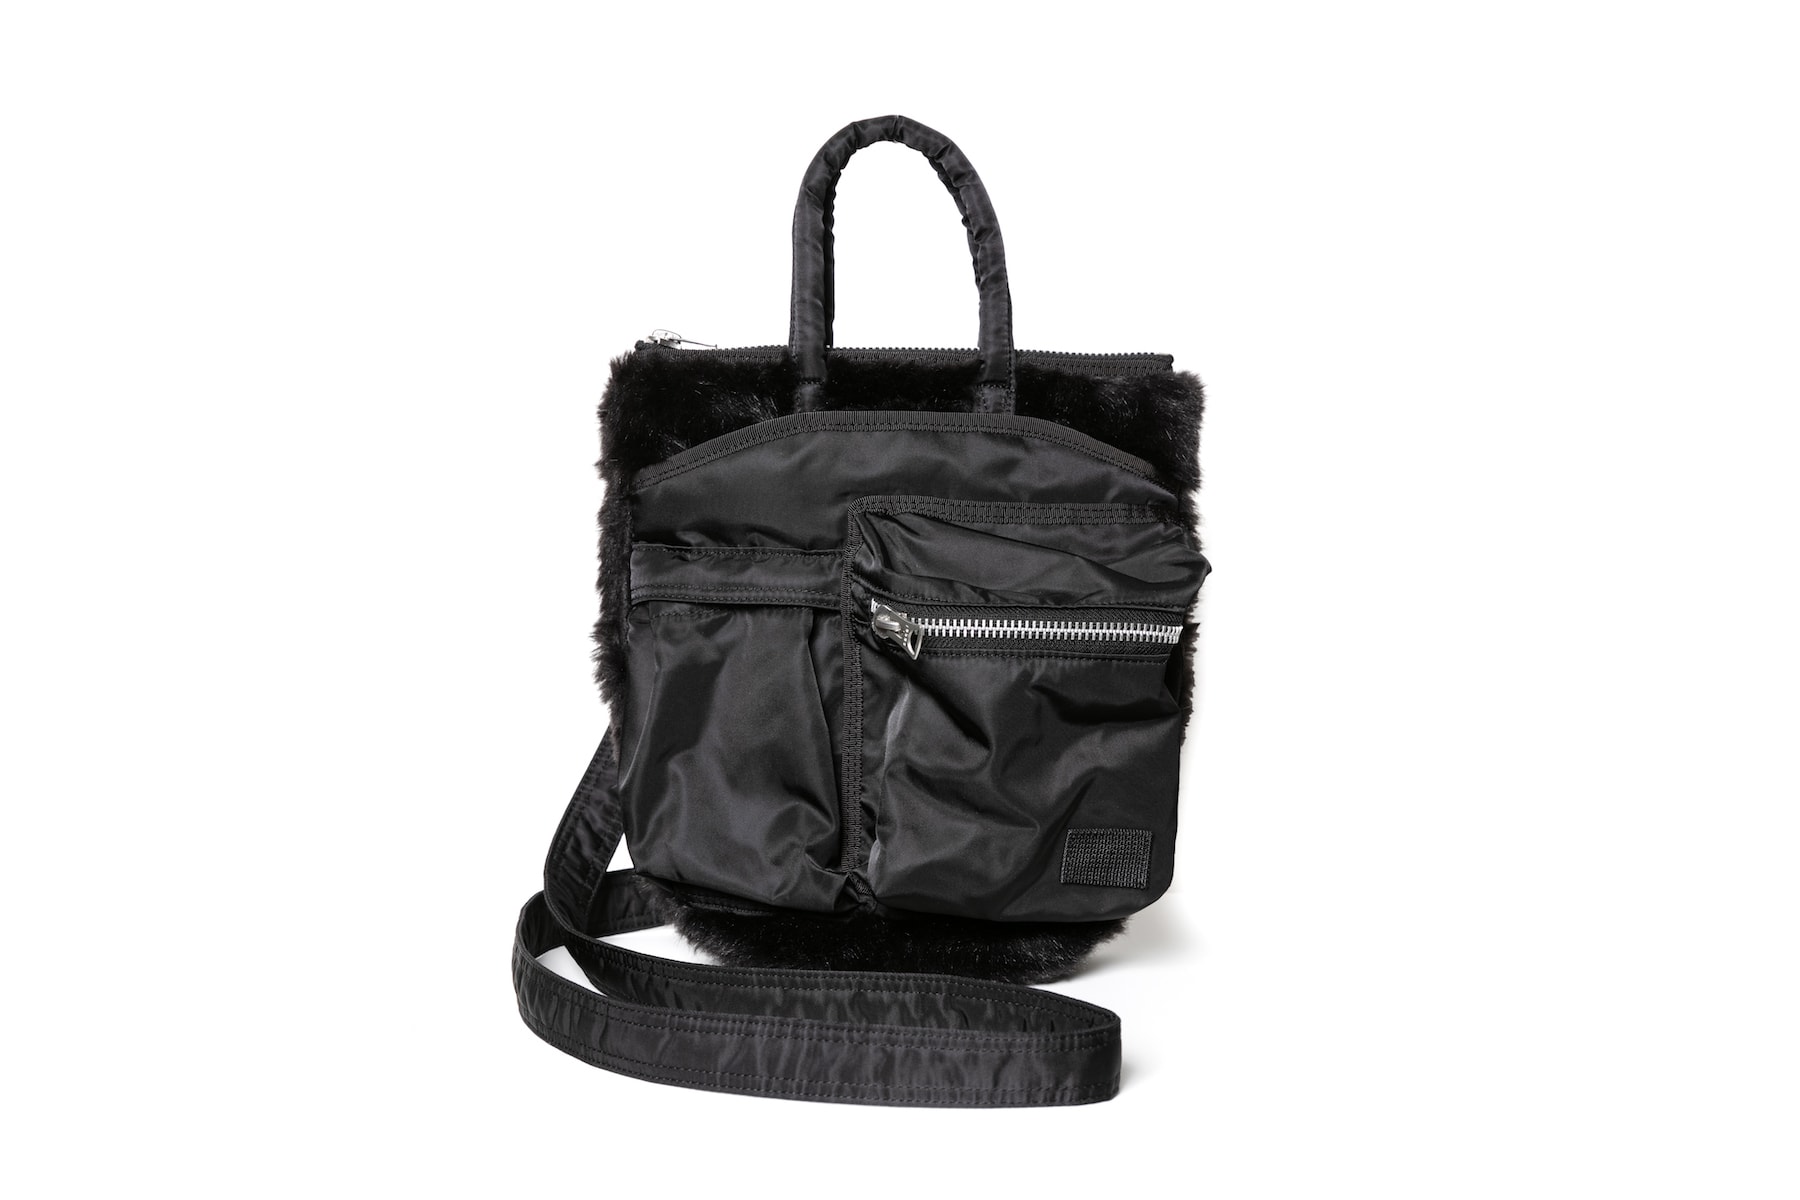 sacai x Porter Bag Collaboration Nylon Zip Pouch Furry Olive Green Black Accessory